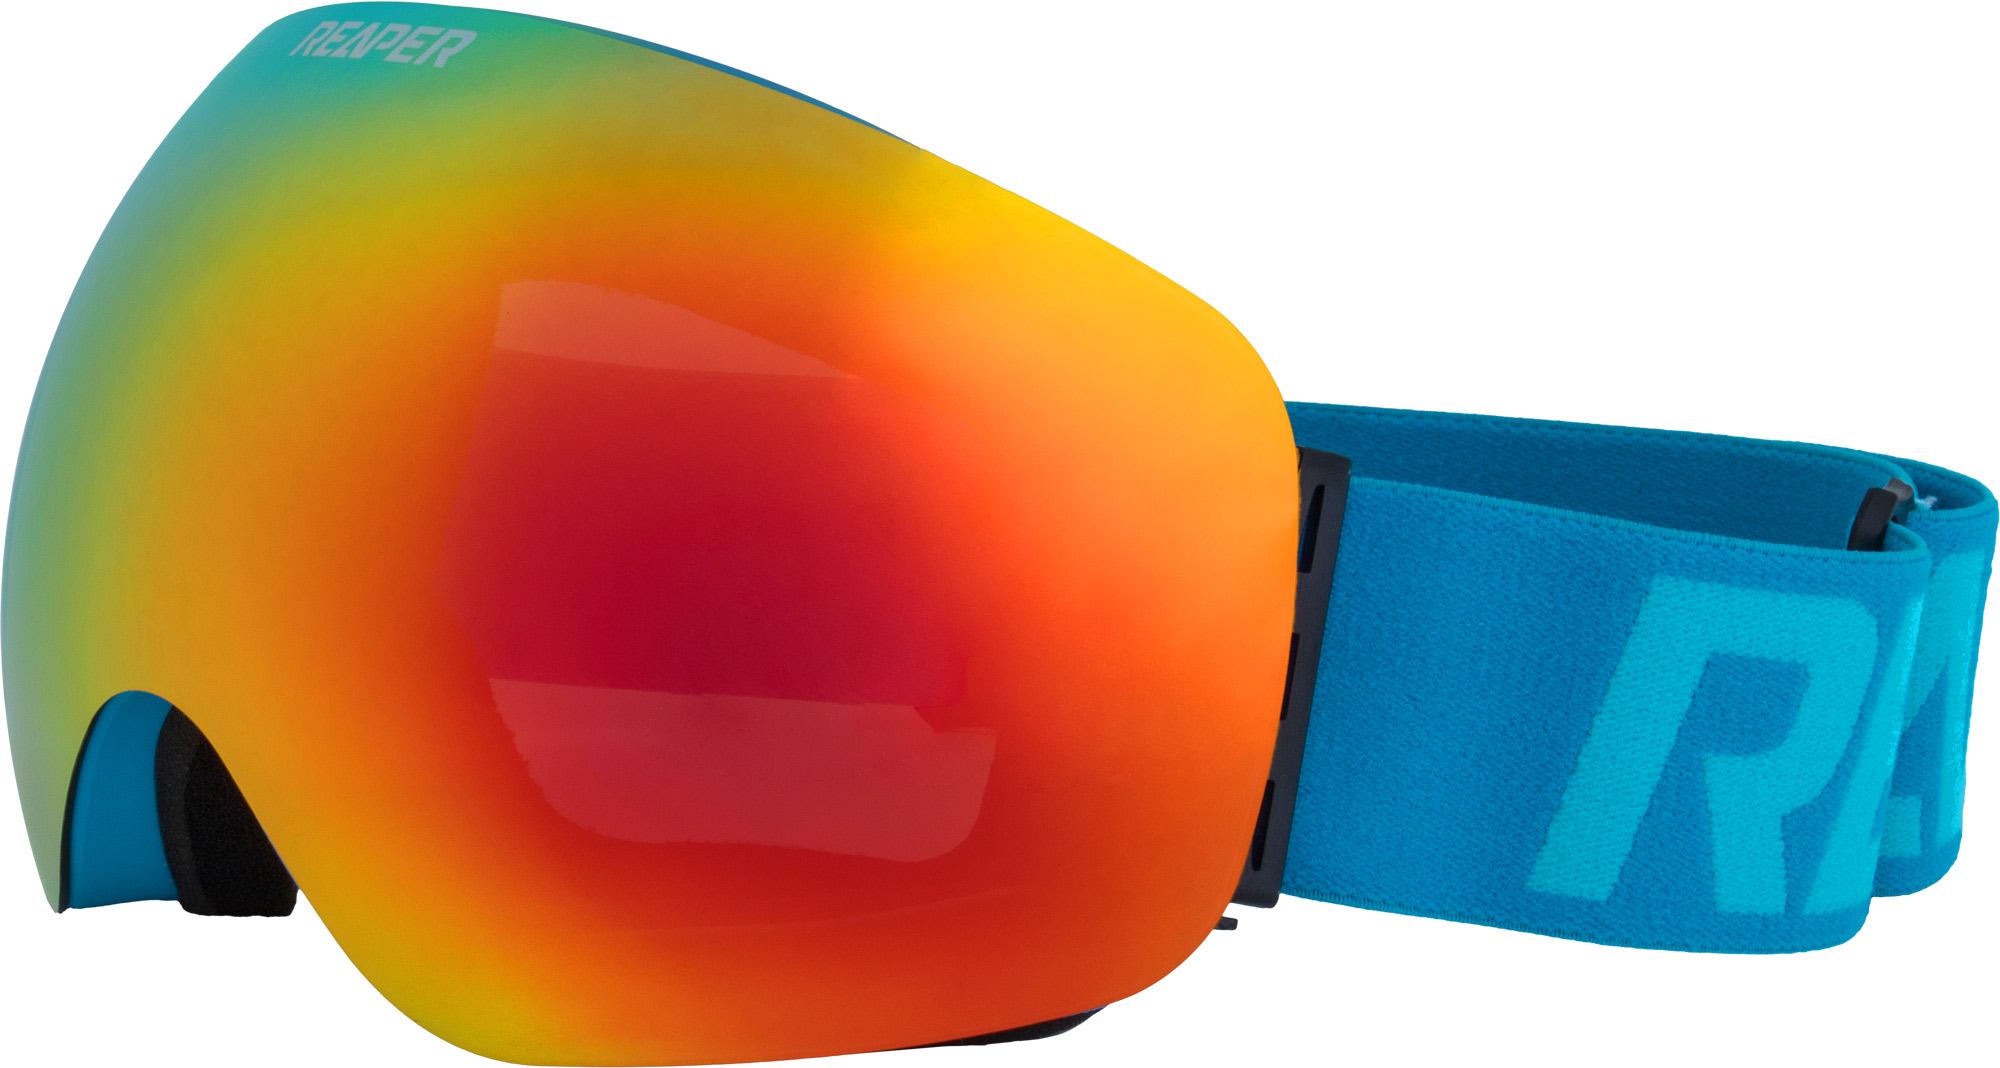 Snowboardové brýle